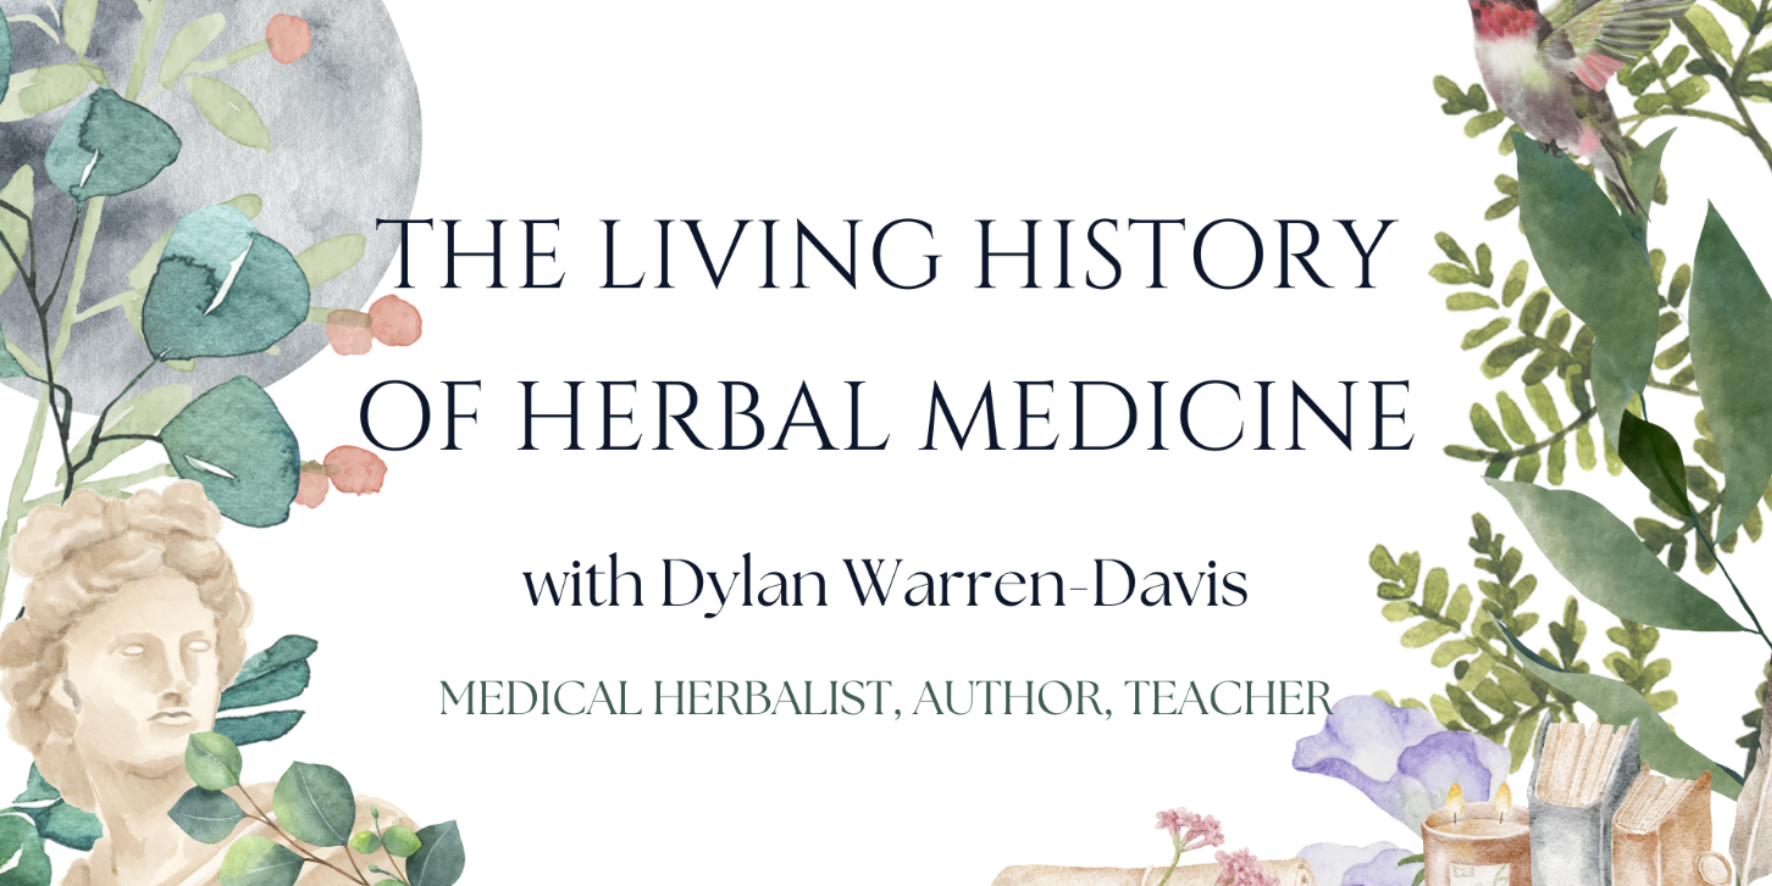 The Living History of Herbal Medicine with Dylan Warren-Davis